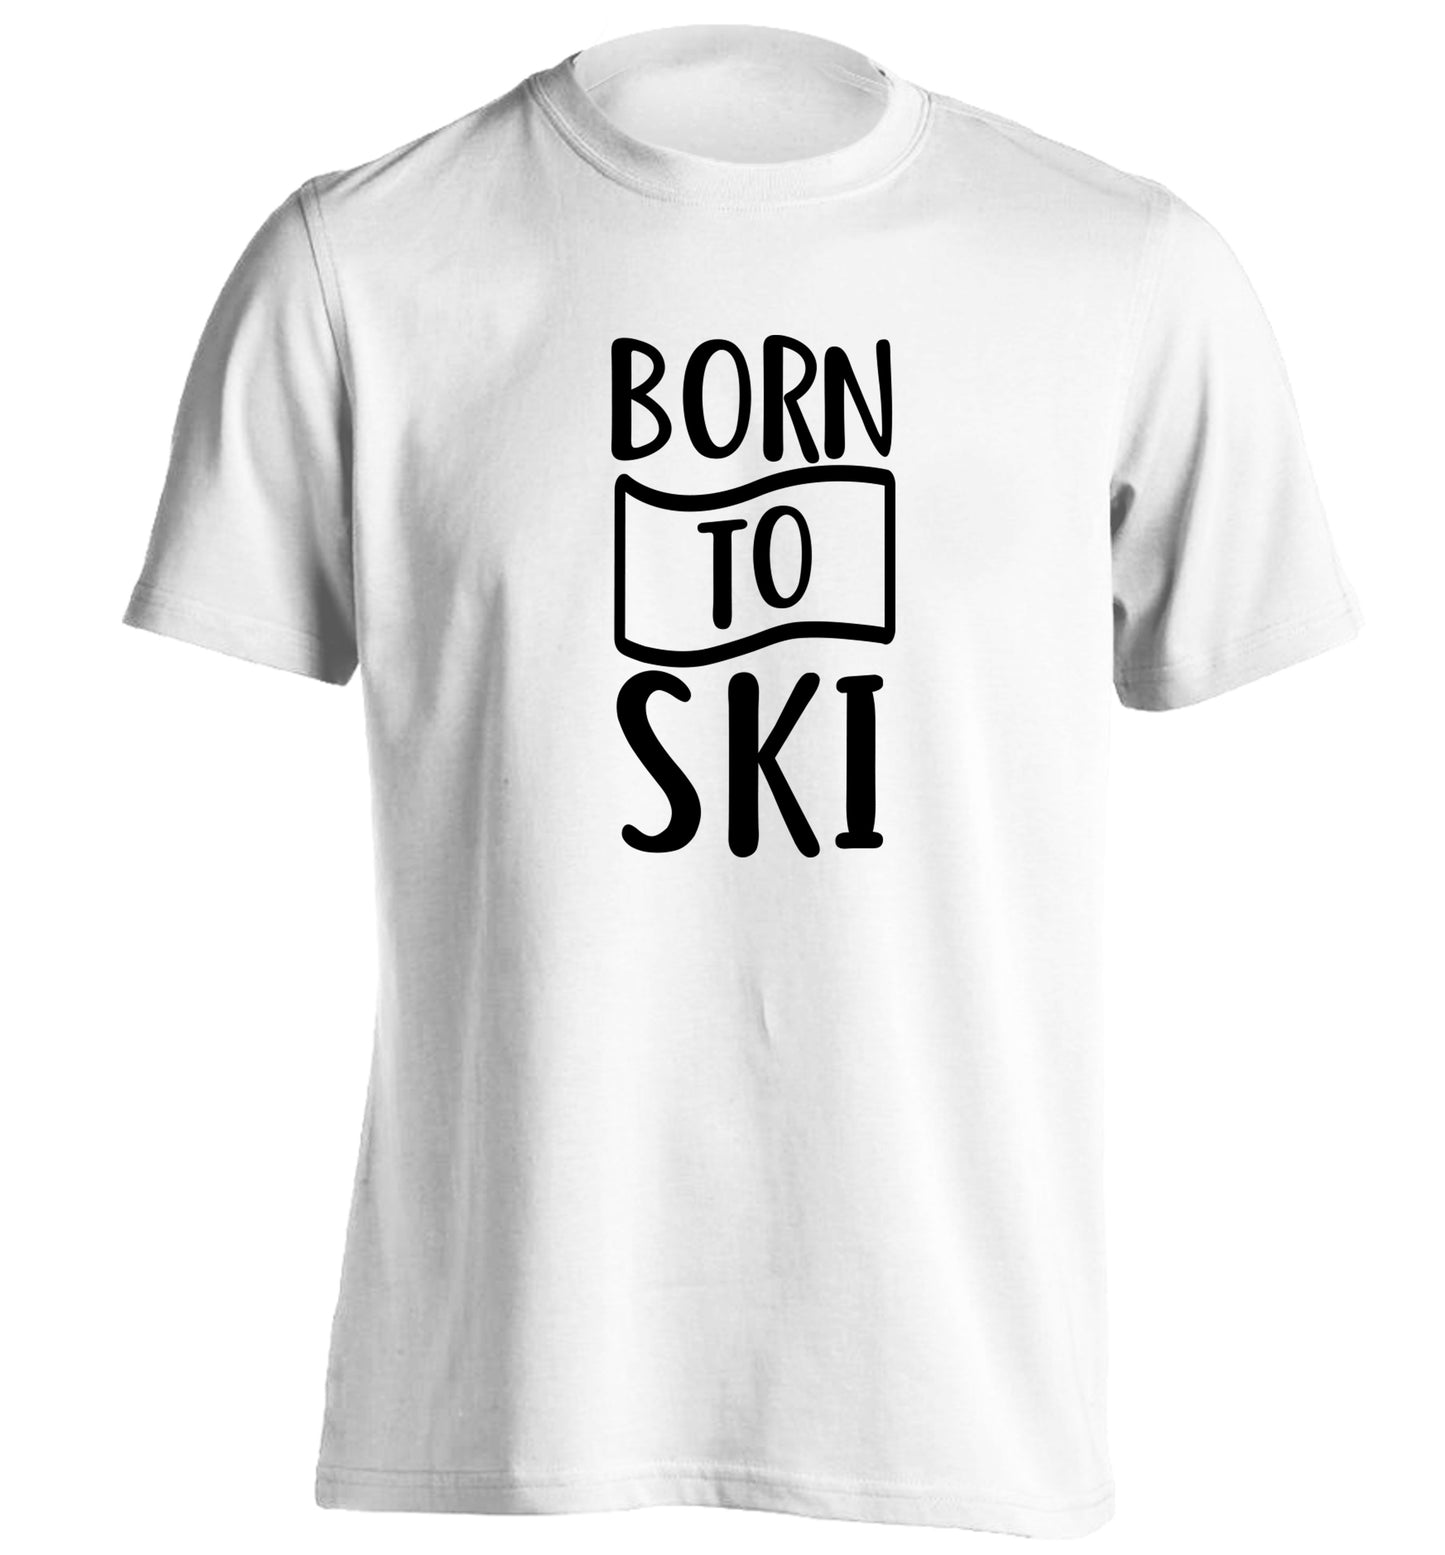 Born to ski adults unisexwhite Tshirt 2XL